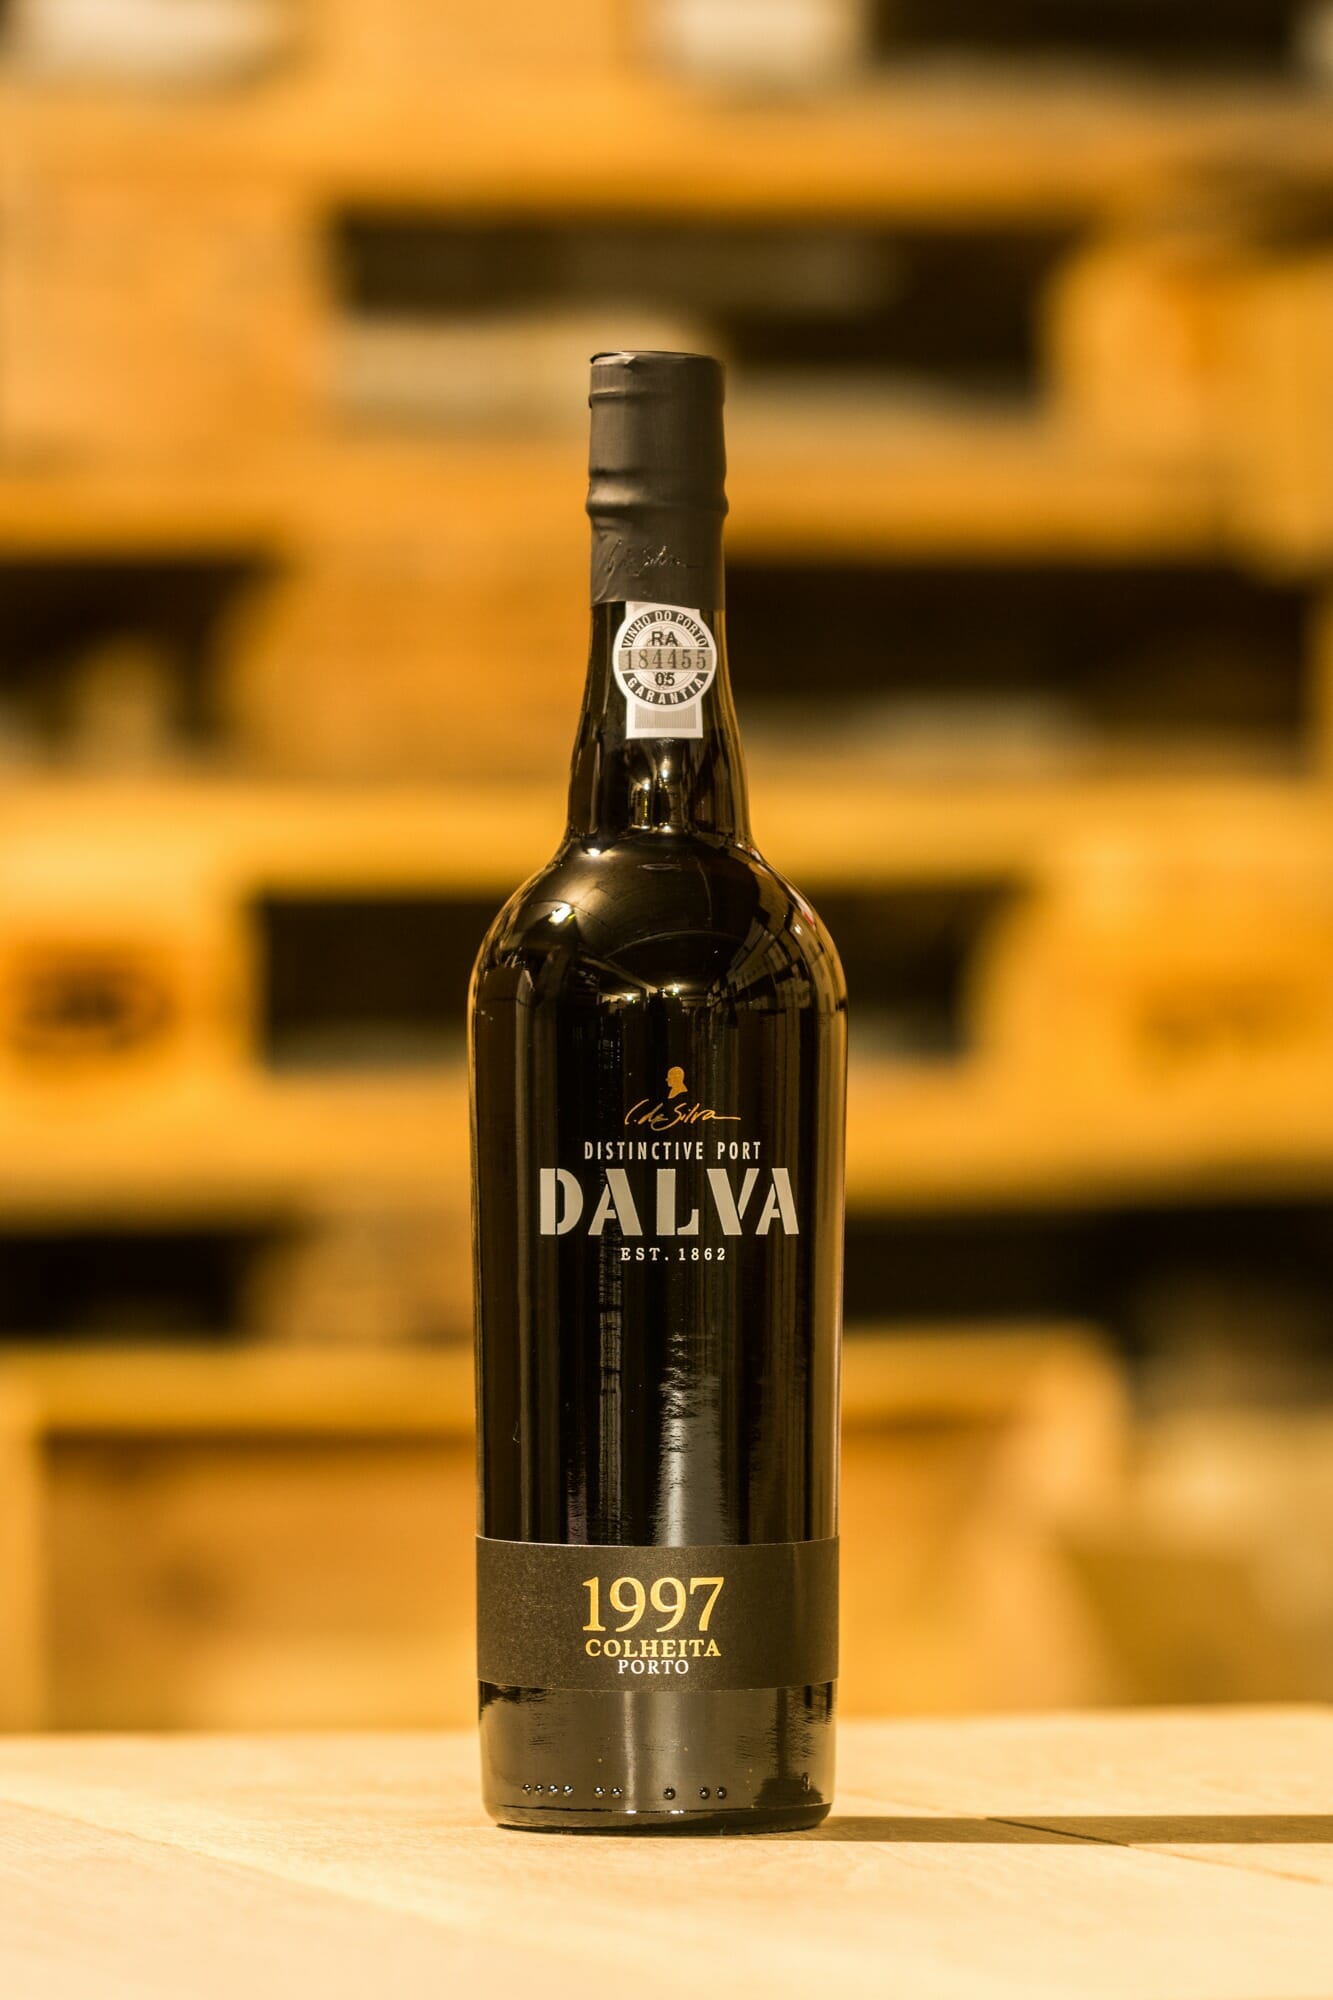 Dalva Colheita Port 1997